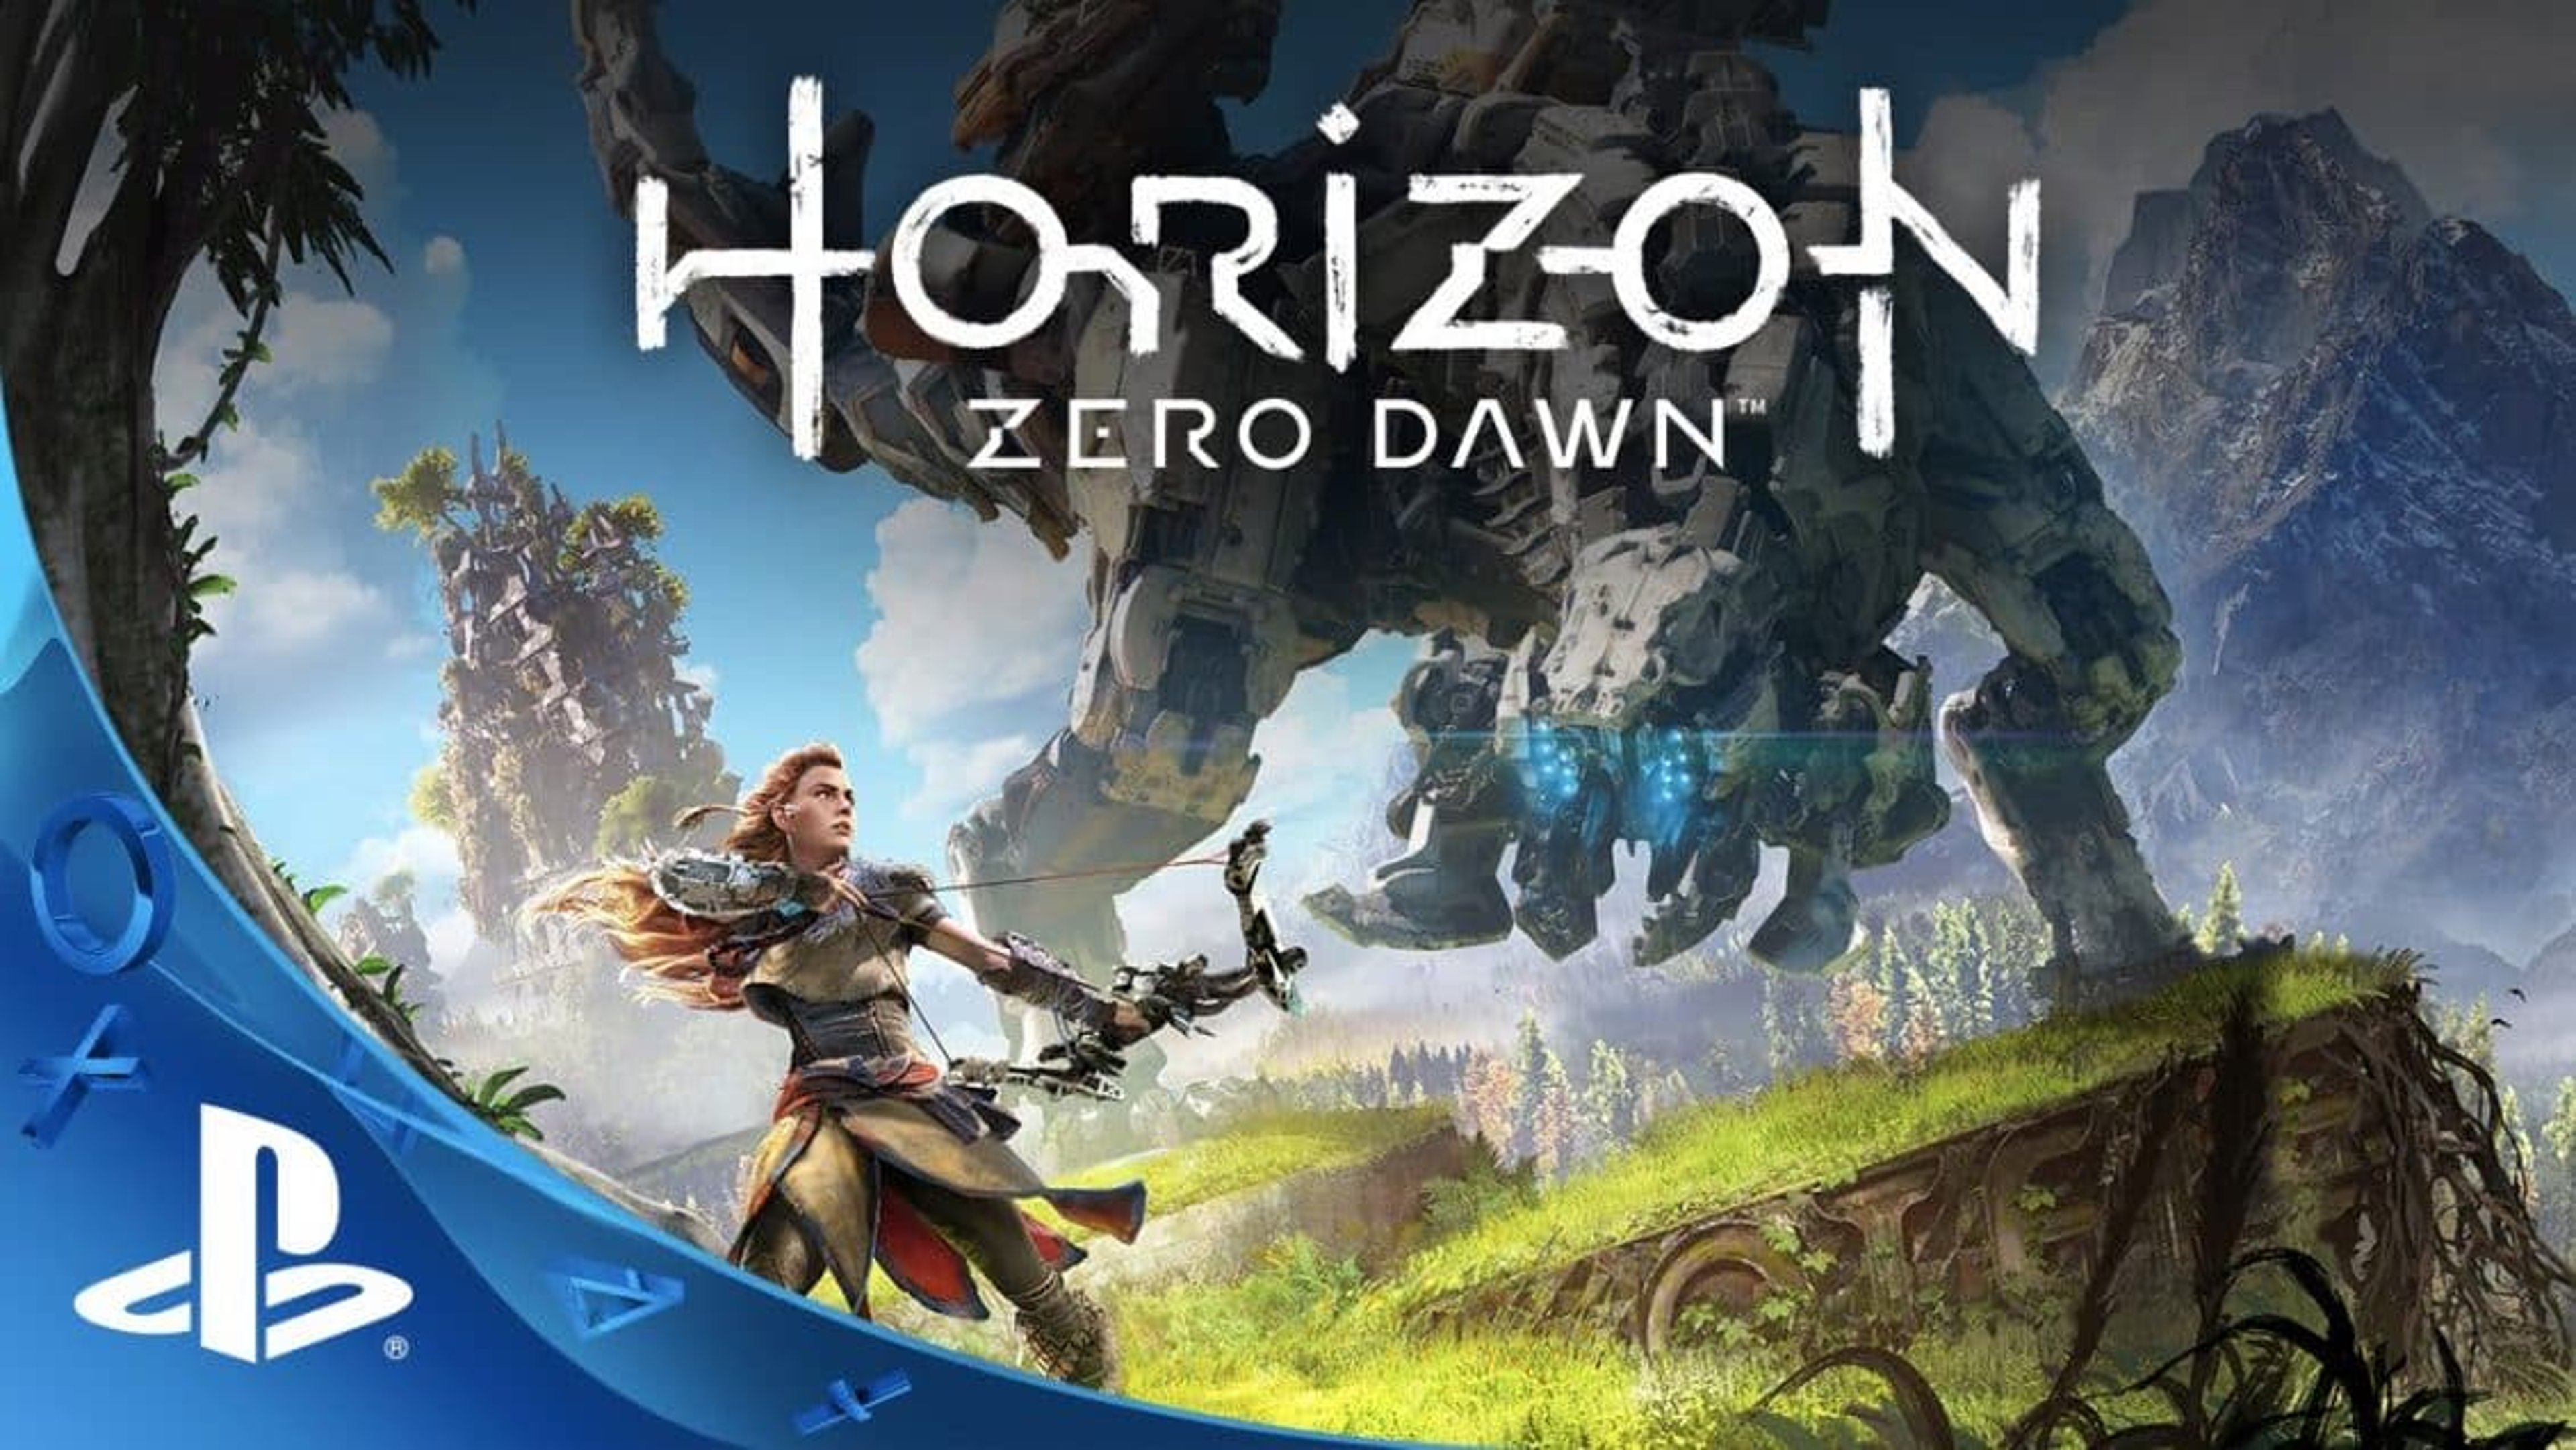 Horizon Zero Dawn a quota 7,6 milioni di copie vendute